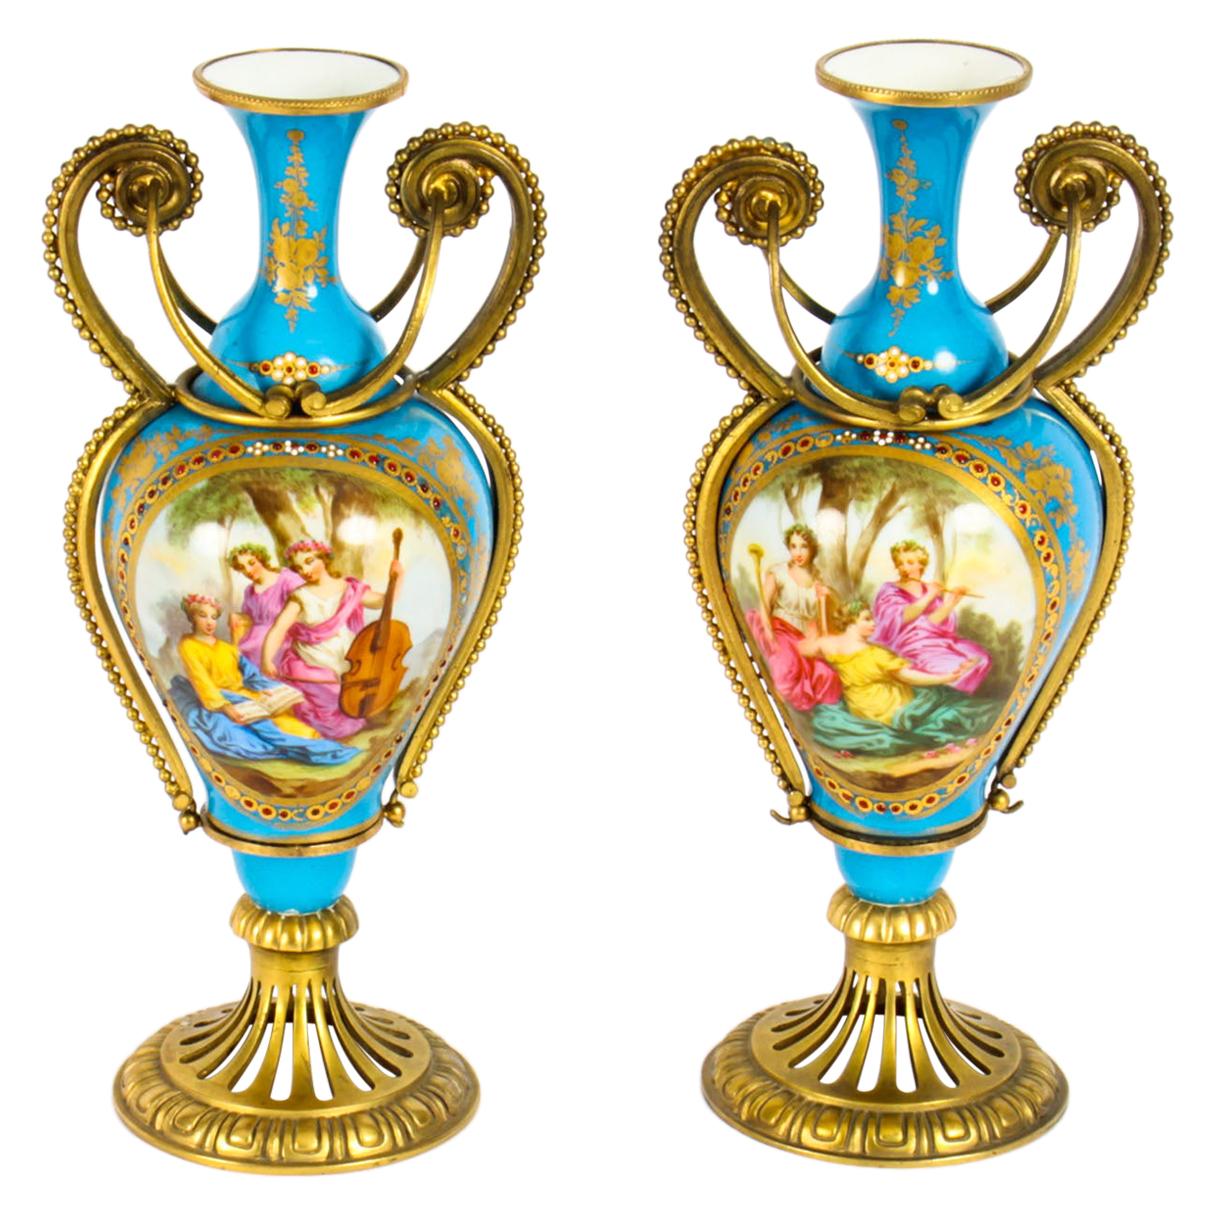 Antique Pair of French Ormolu Mounted Bleu Celeste Sèvres Vases, 19th Century